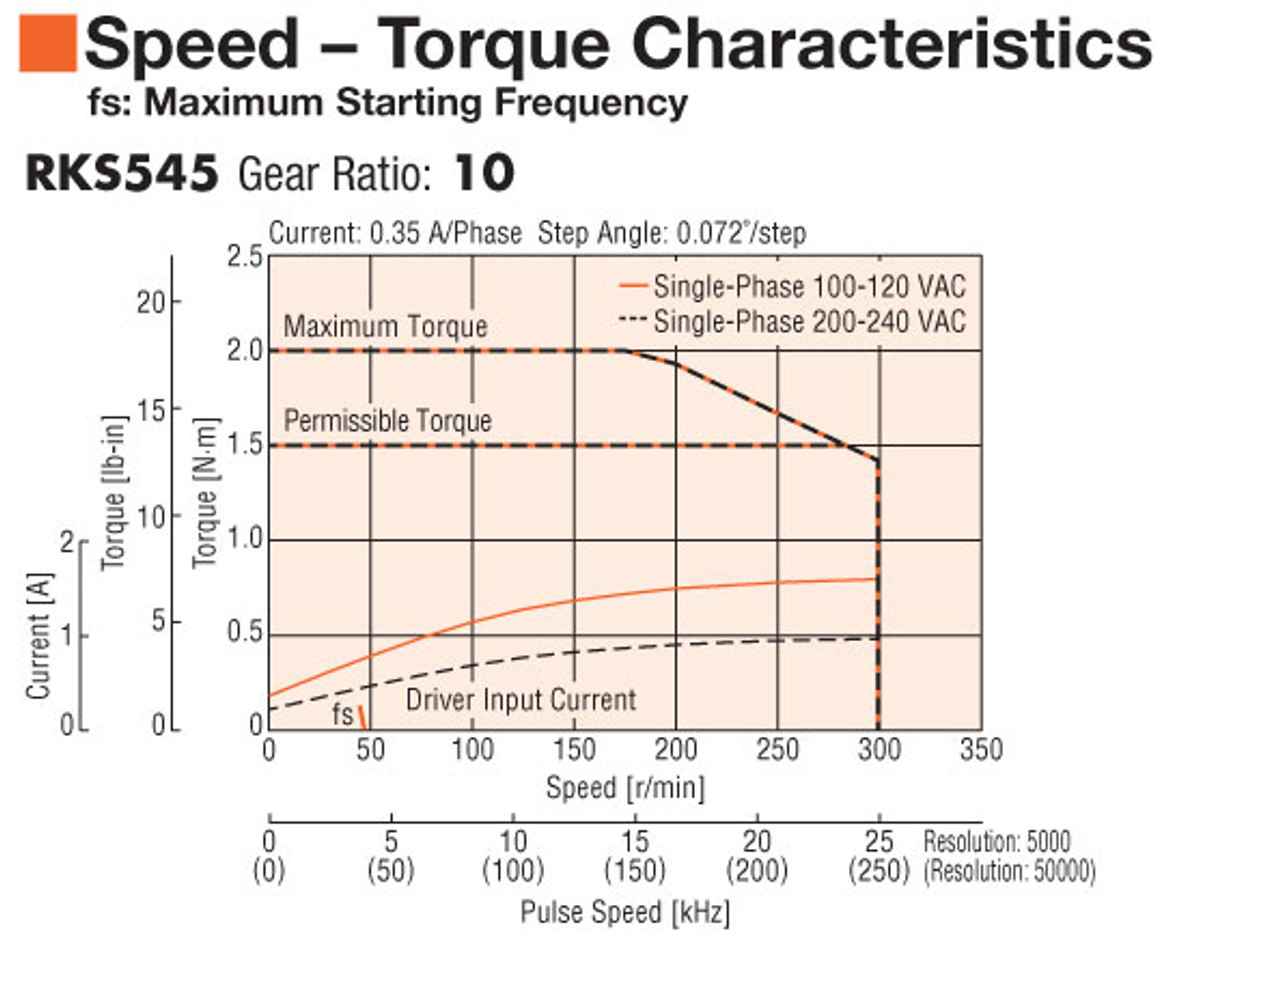 PKE545AC-PS10 - Speed-Torque